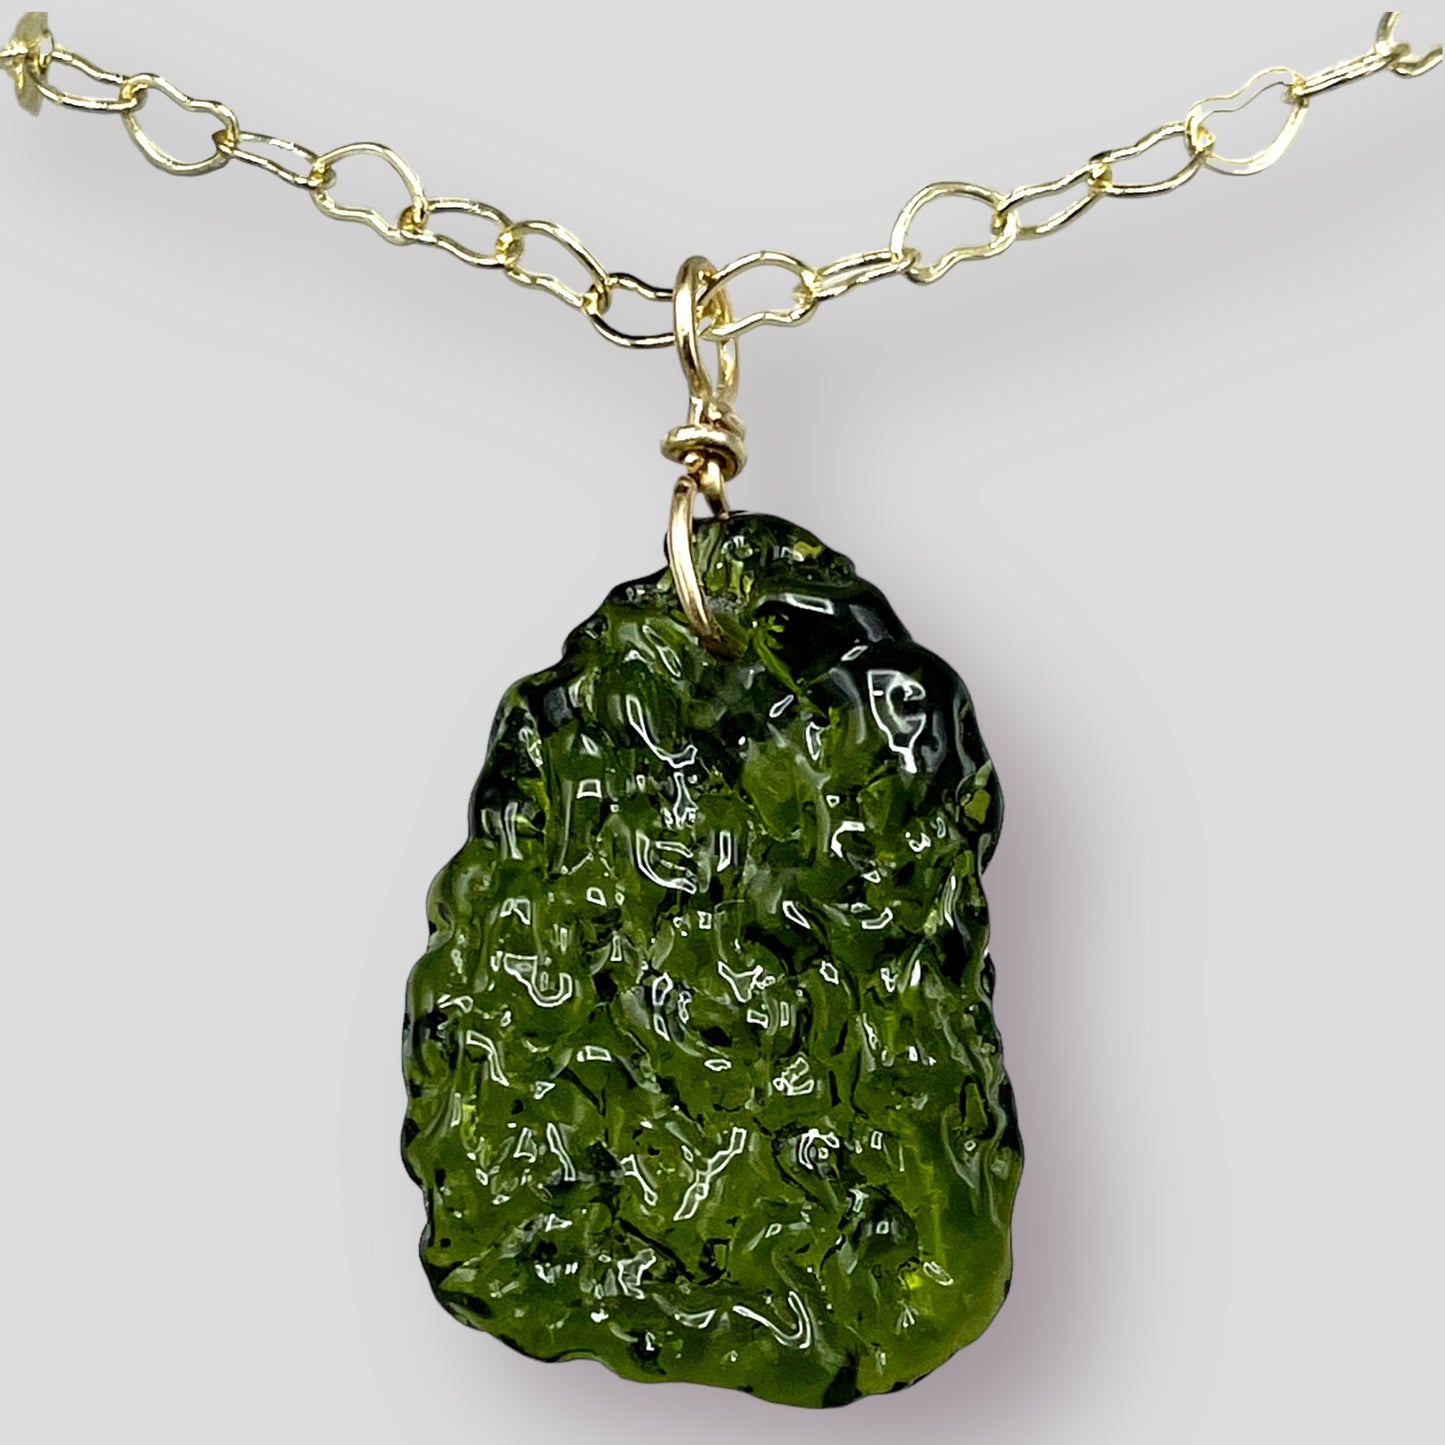 Natural Moldavite gemstone pendant necklace on Gold Fill chain